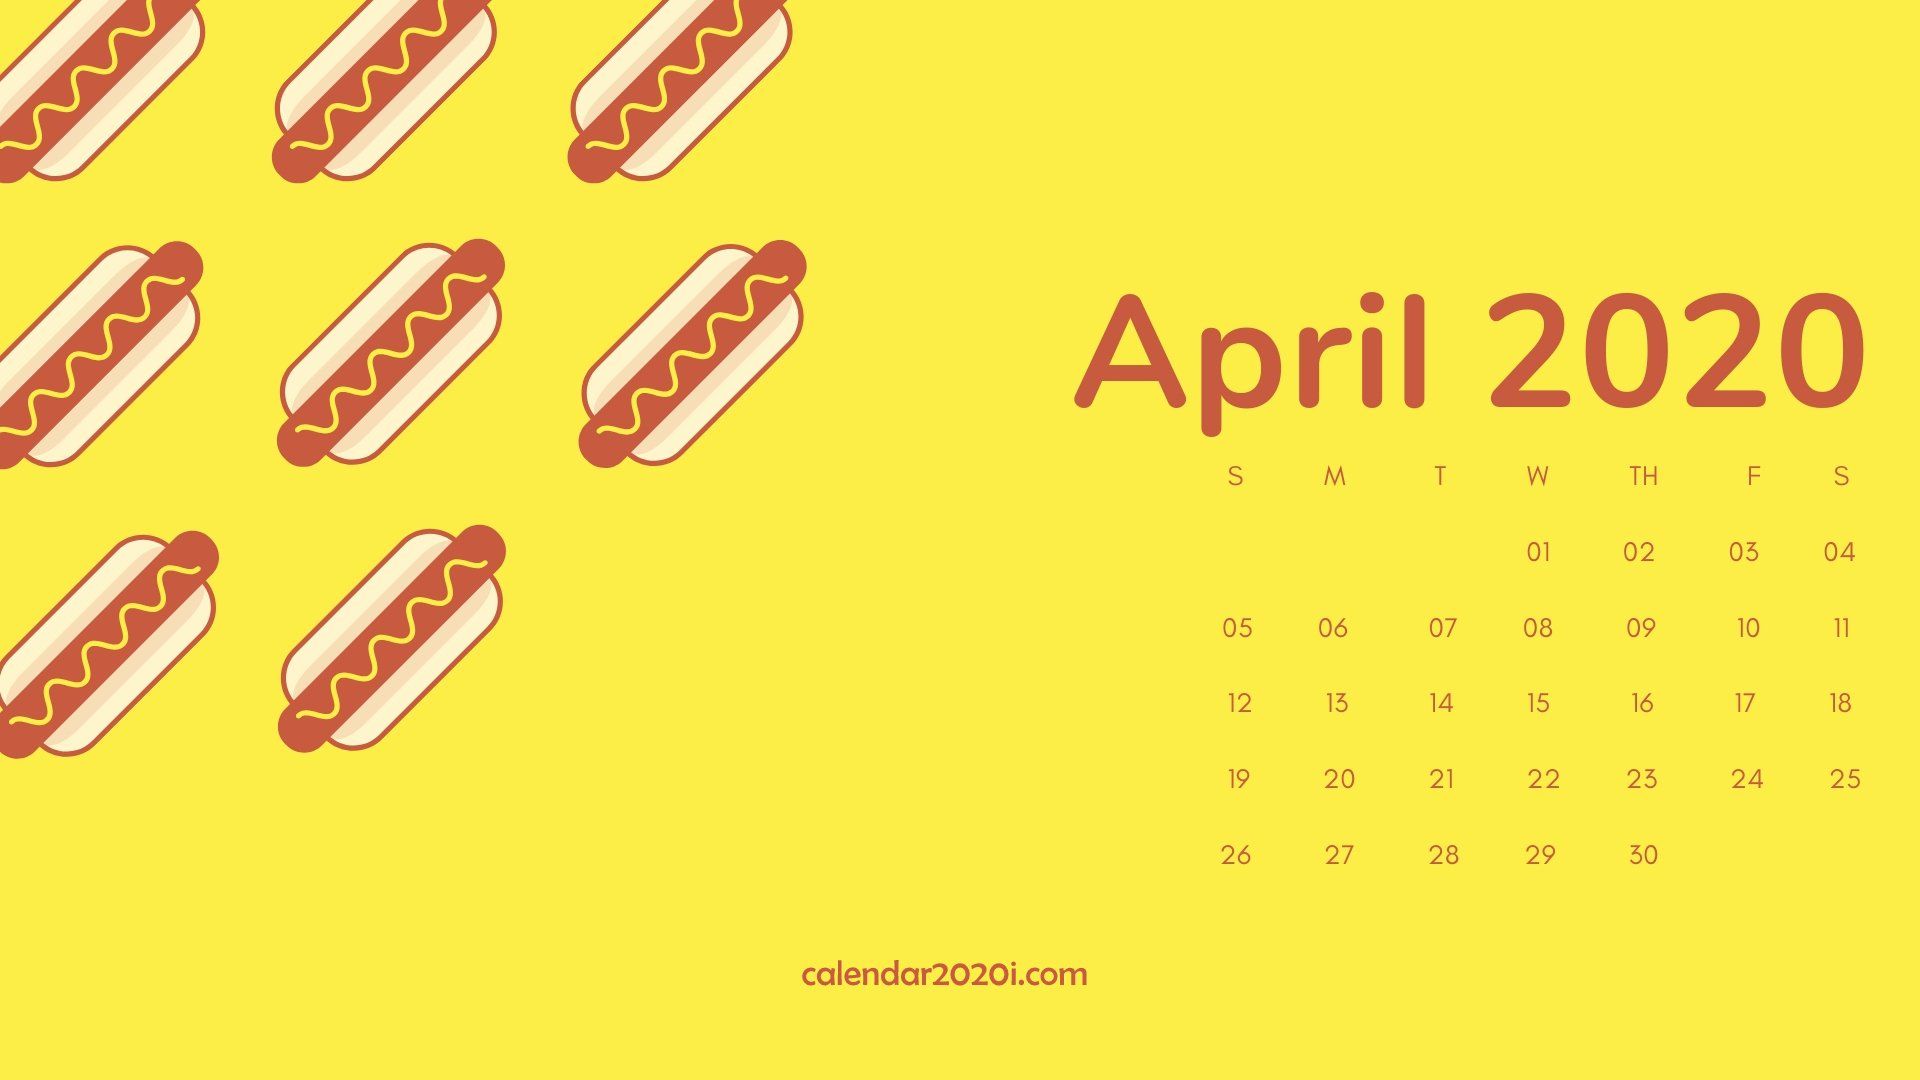 April 2020 Calendar Desktop Wallpaper in 2019 Calendar 1920x1080